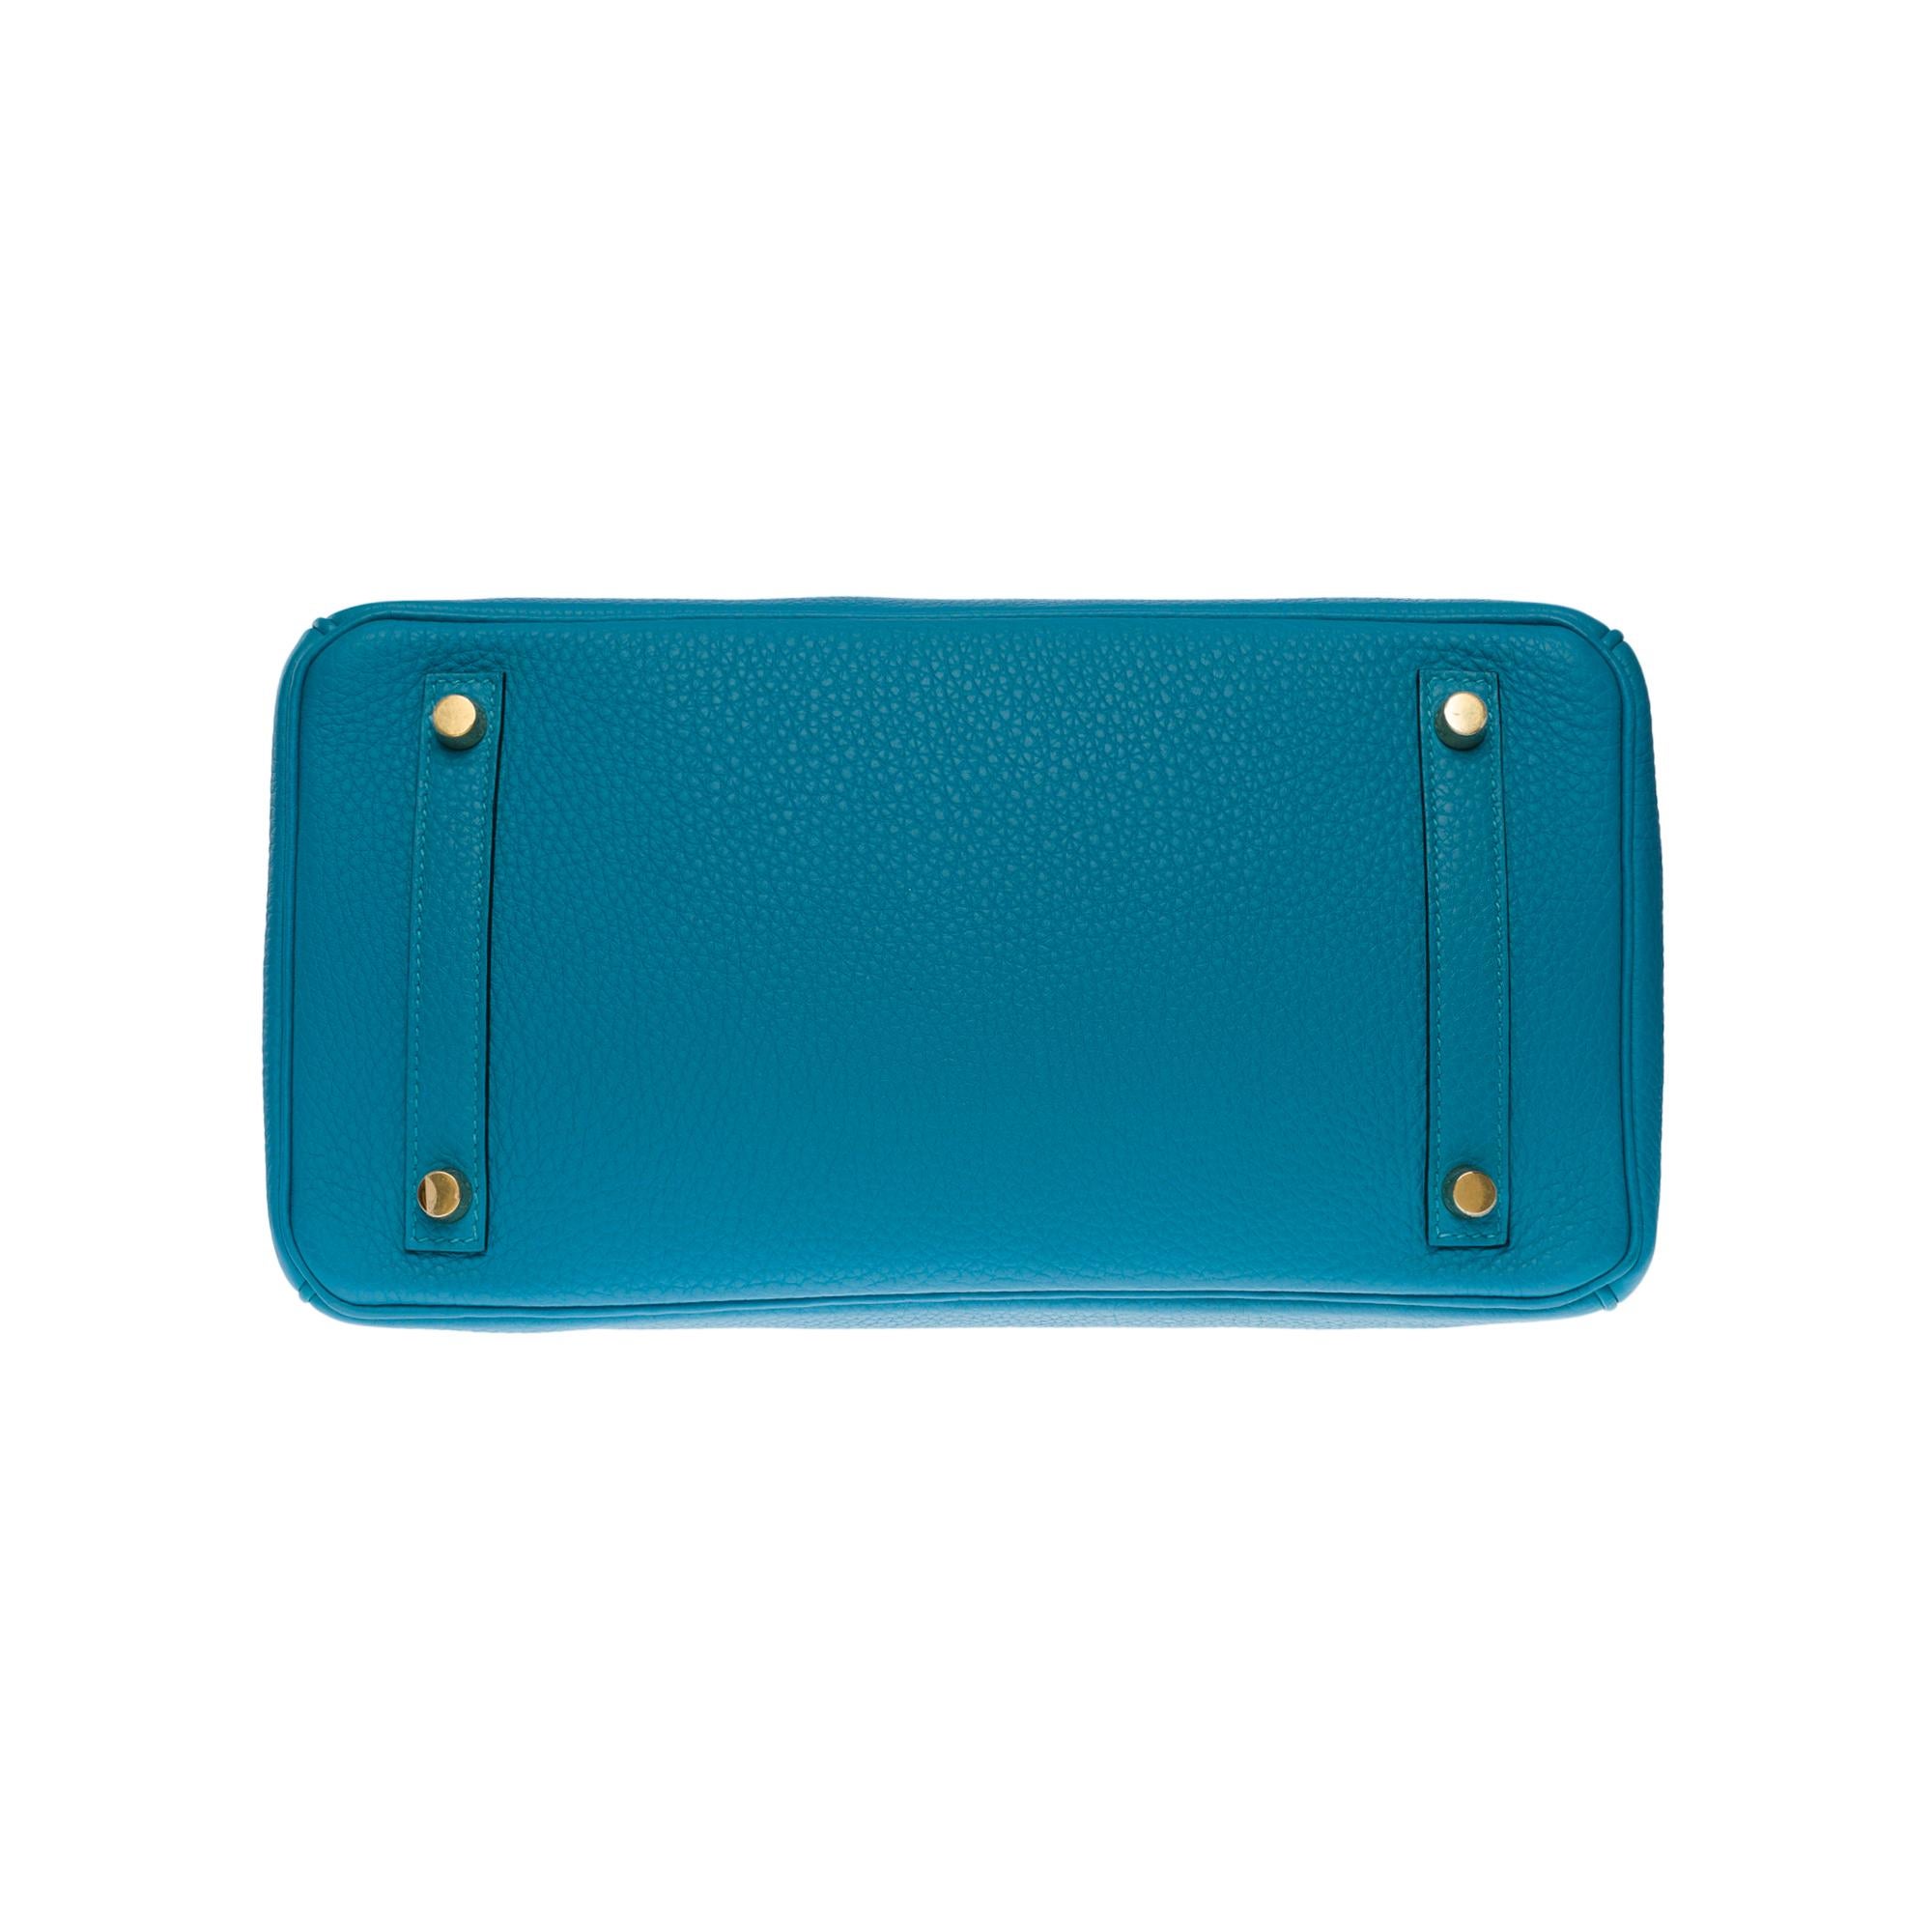 Amazing New Hermès Birkin 30 handbag in Turquoise Togo leather, GHW For Sale 4